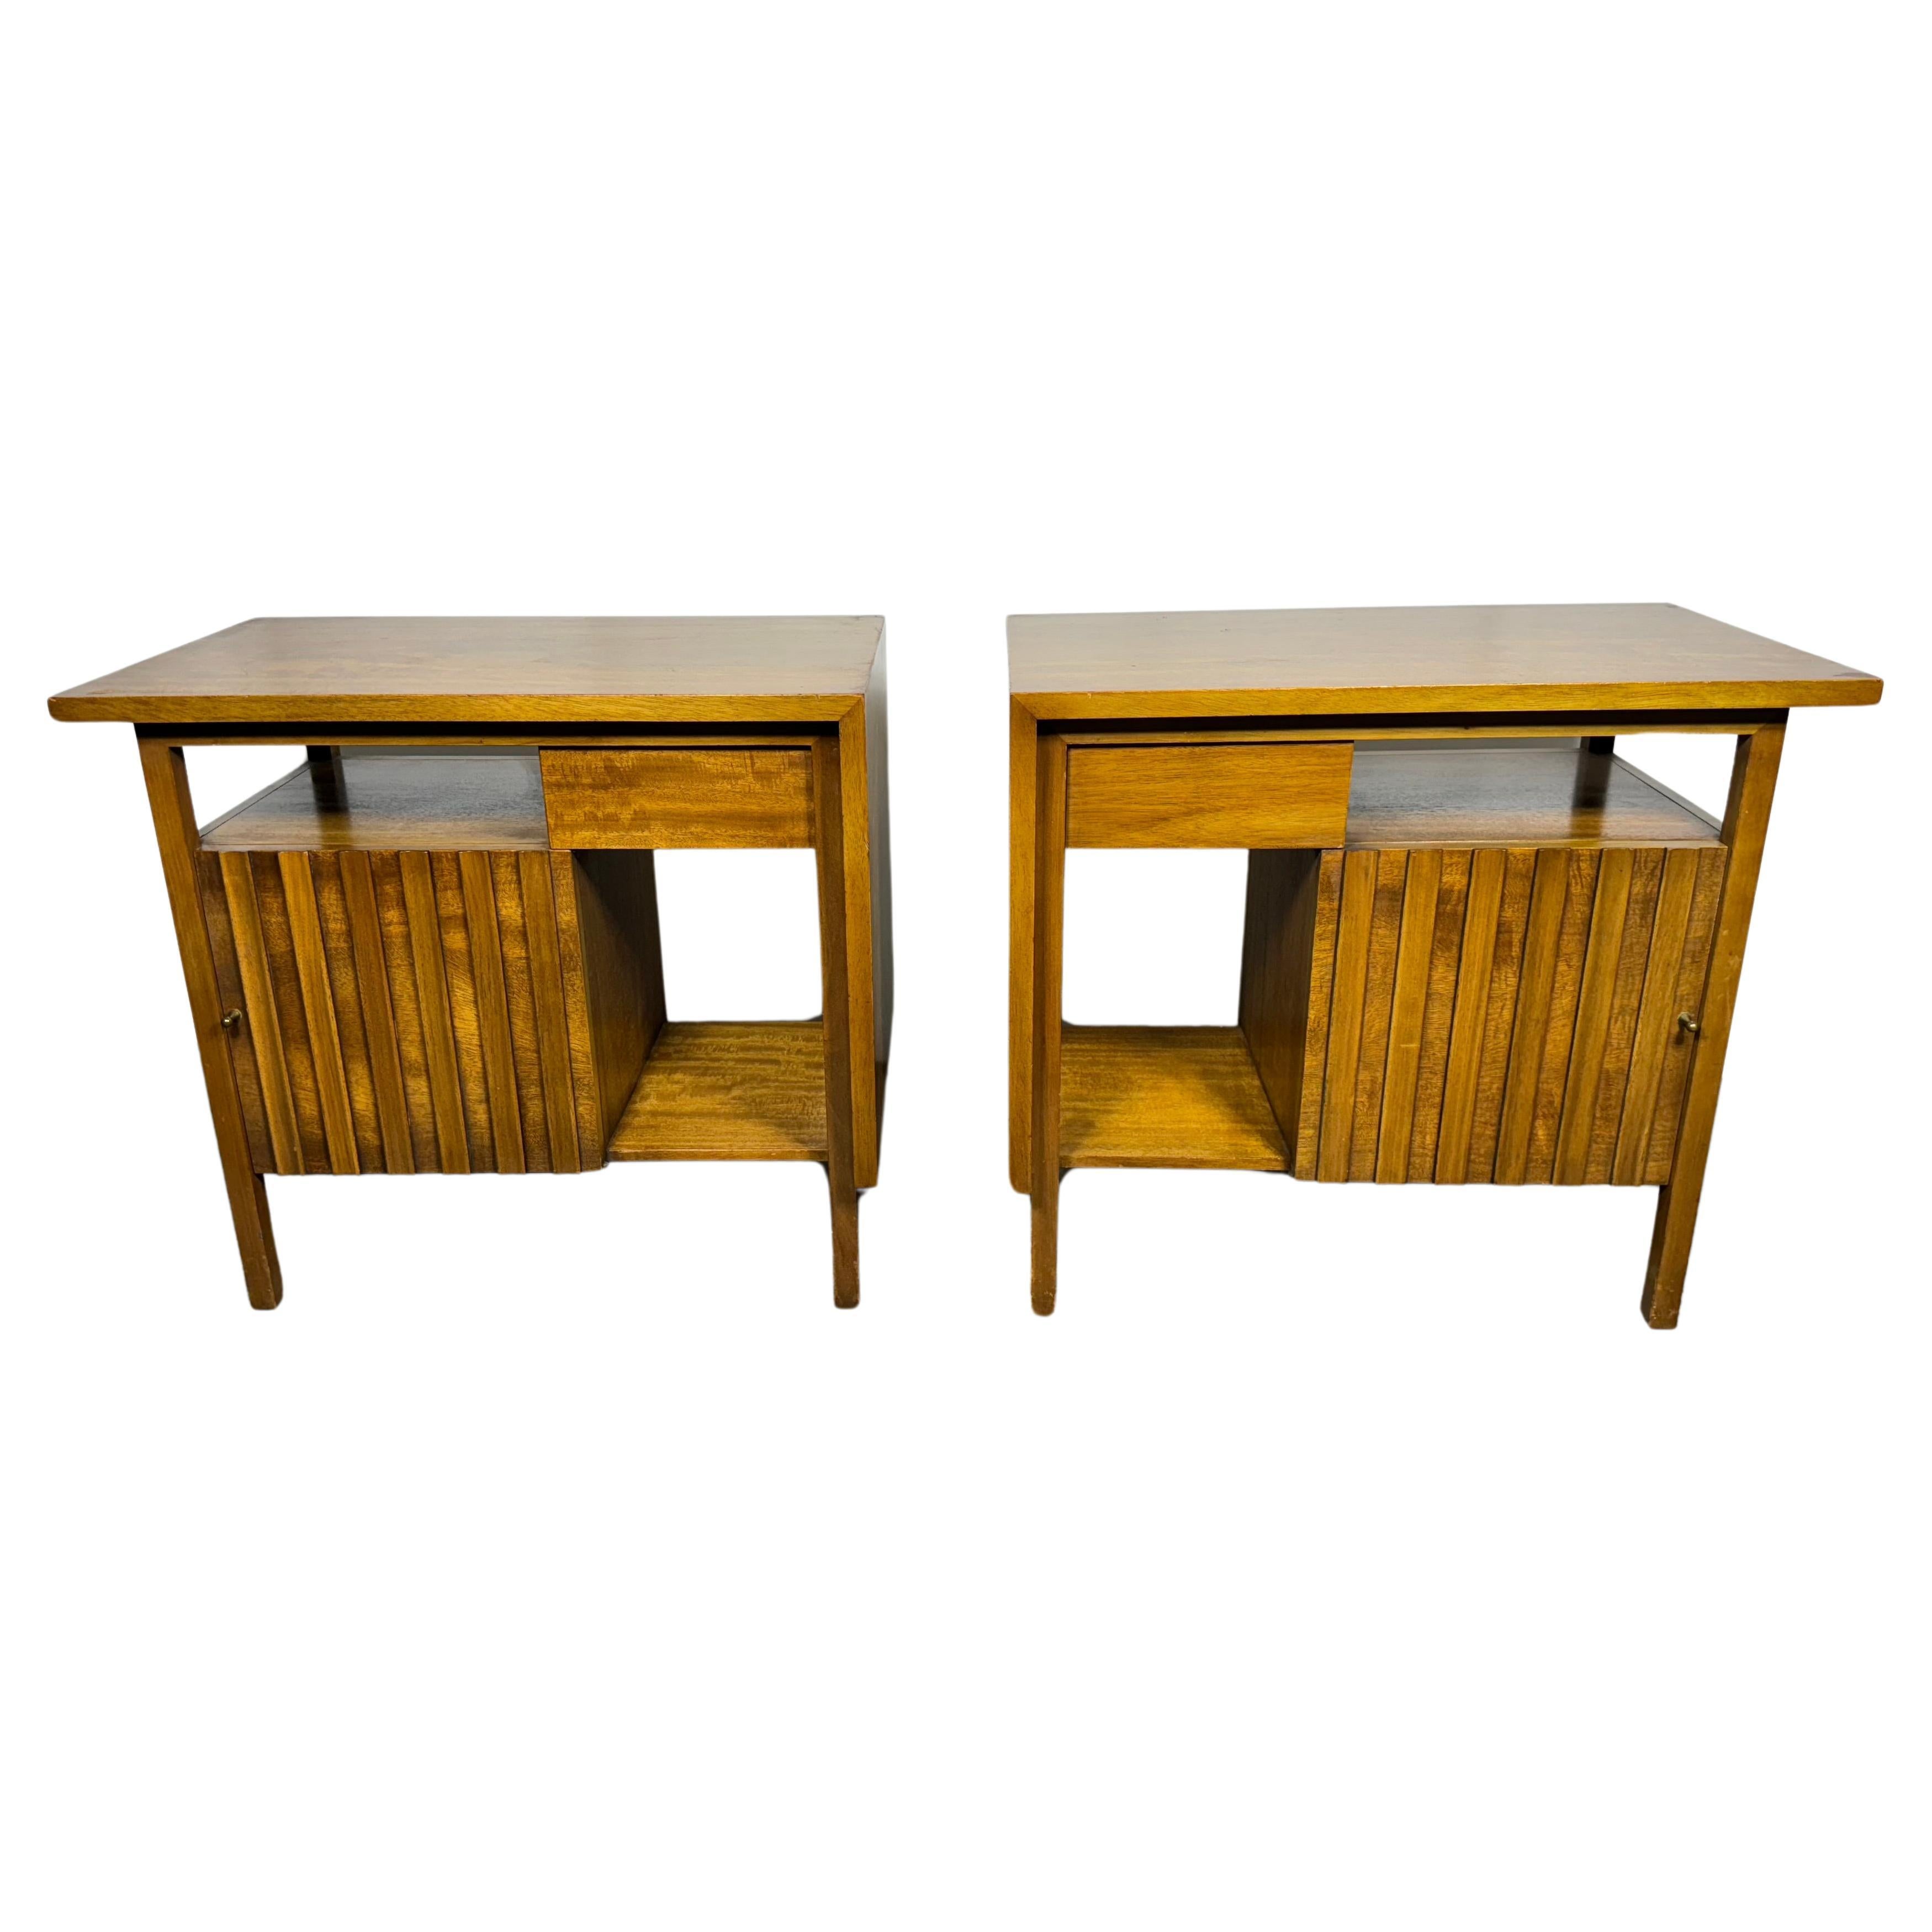 Pair Modernist Sculpted Walnut Nightstands / End Tables by John Widdicomb